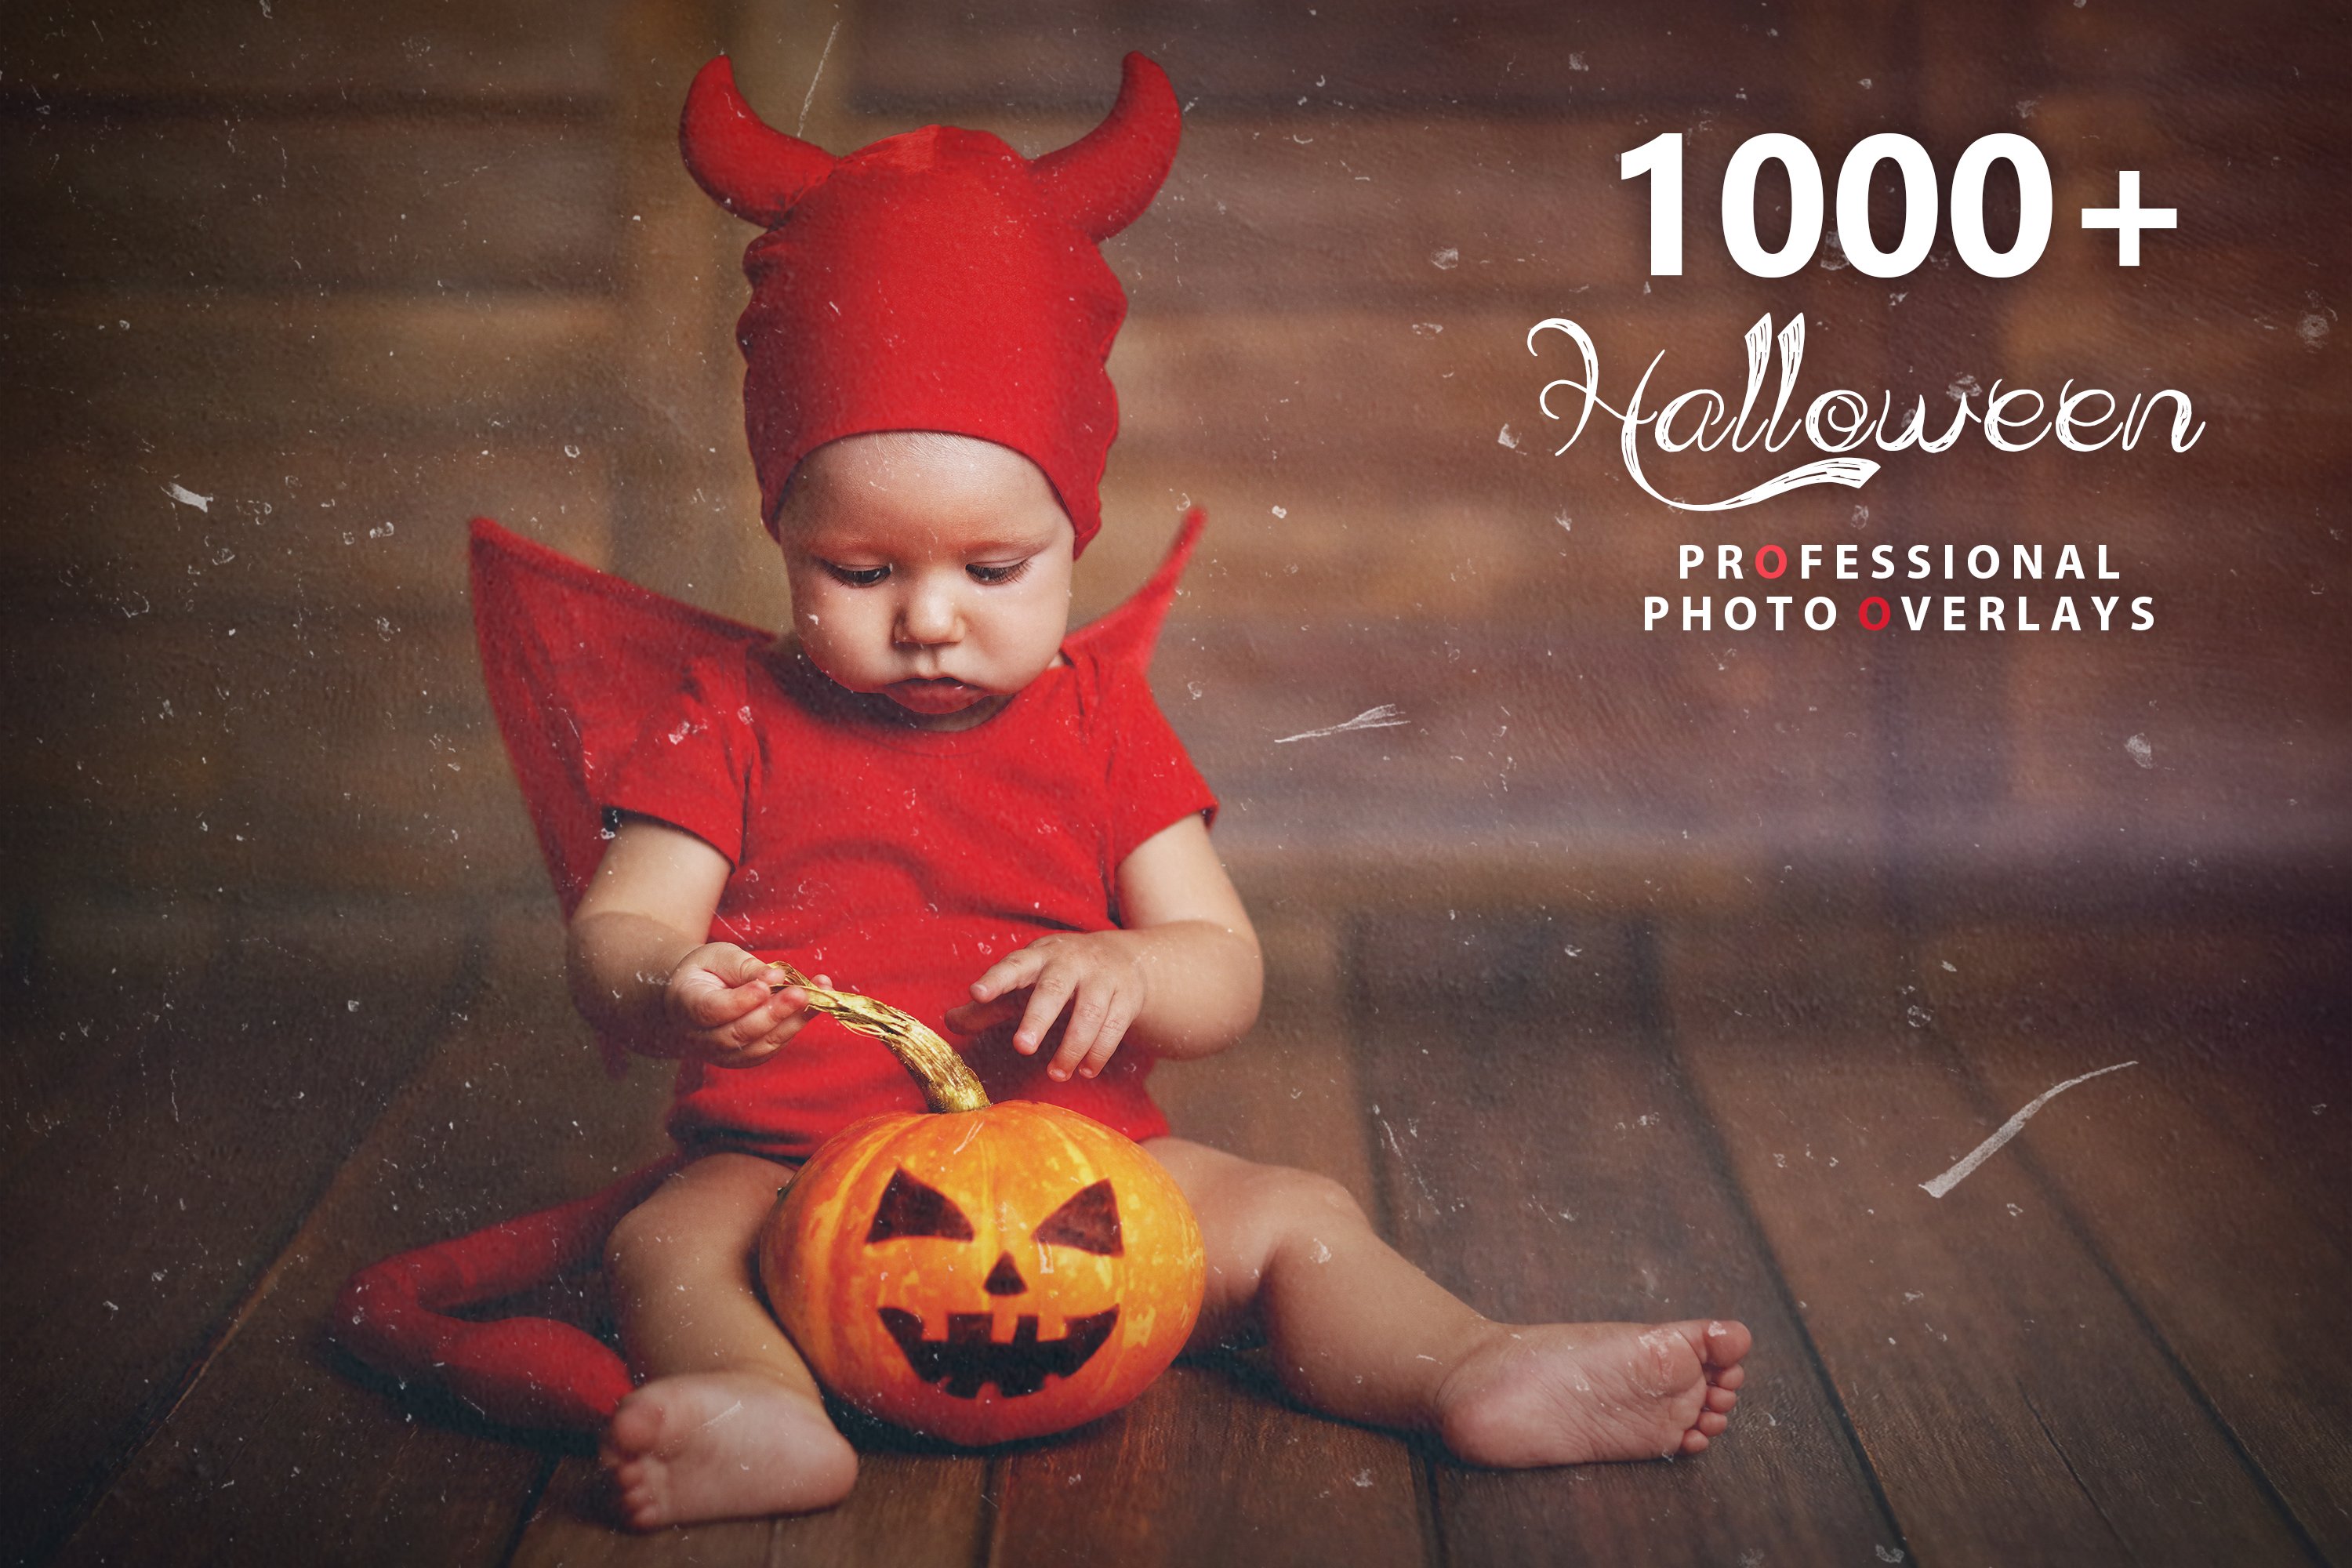 1000+ Halloween Photo Overlayscover image.